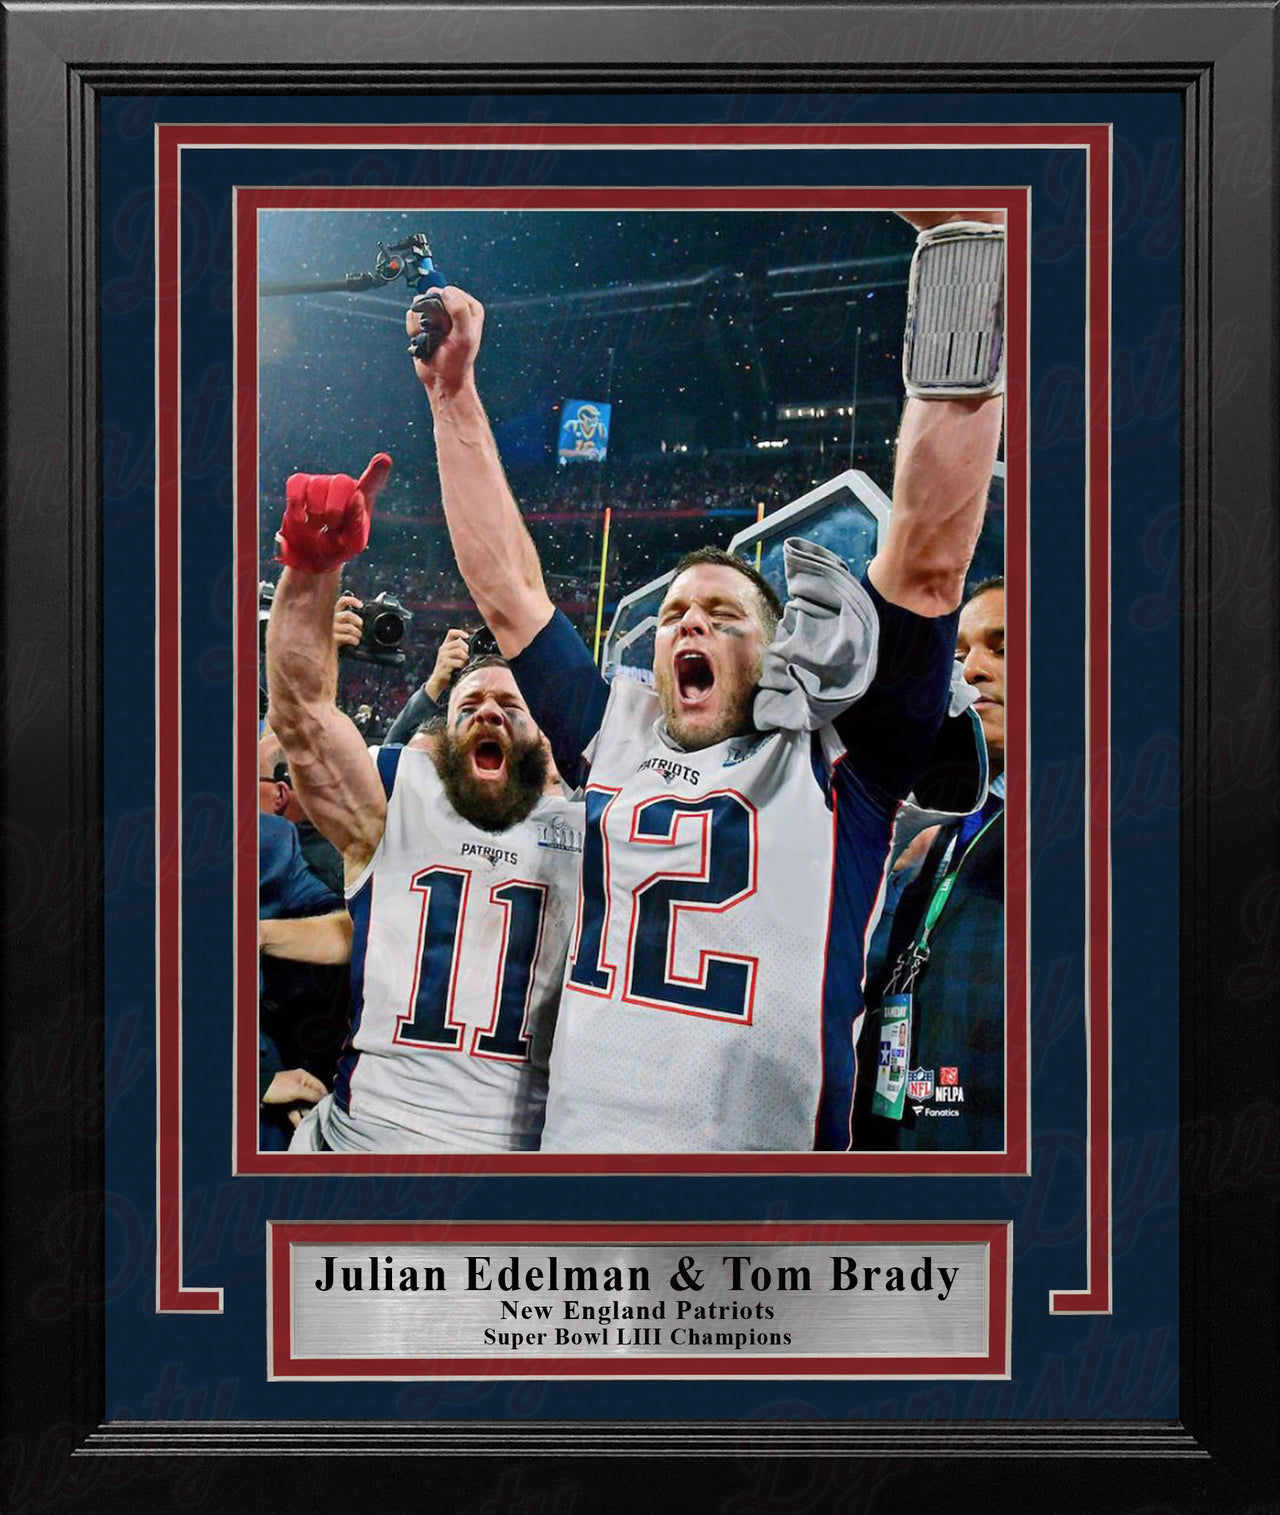 Julian Edelman & Tom Brady Super Bowl LIII New England Patriots 8" x 10" Framed Football Photo - Dynasty Sports & Framing 